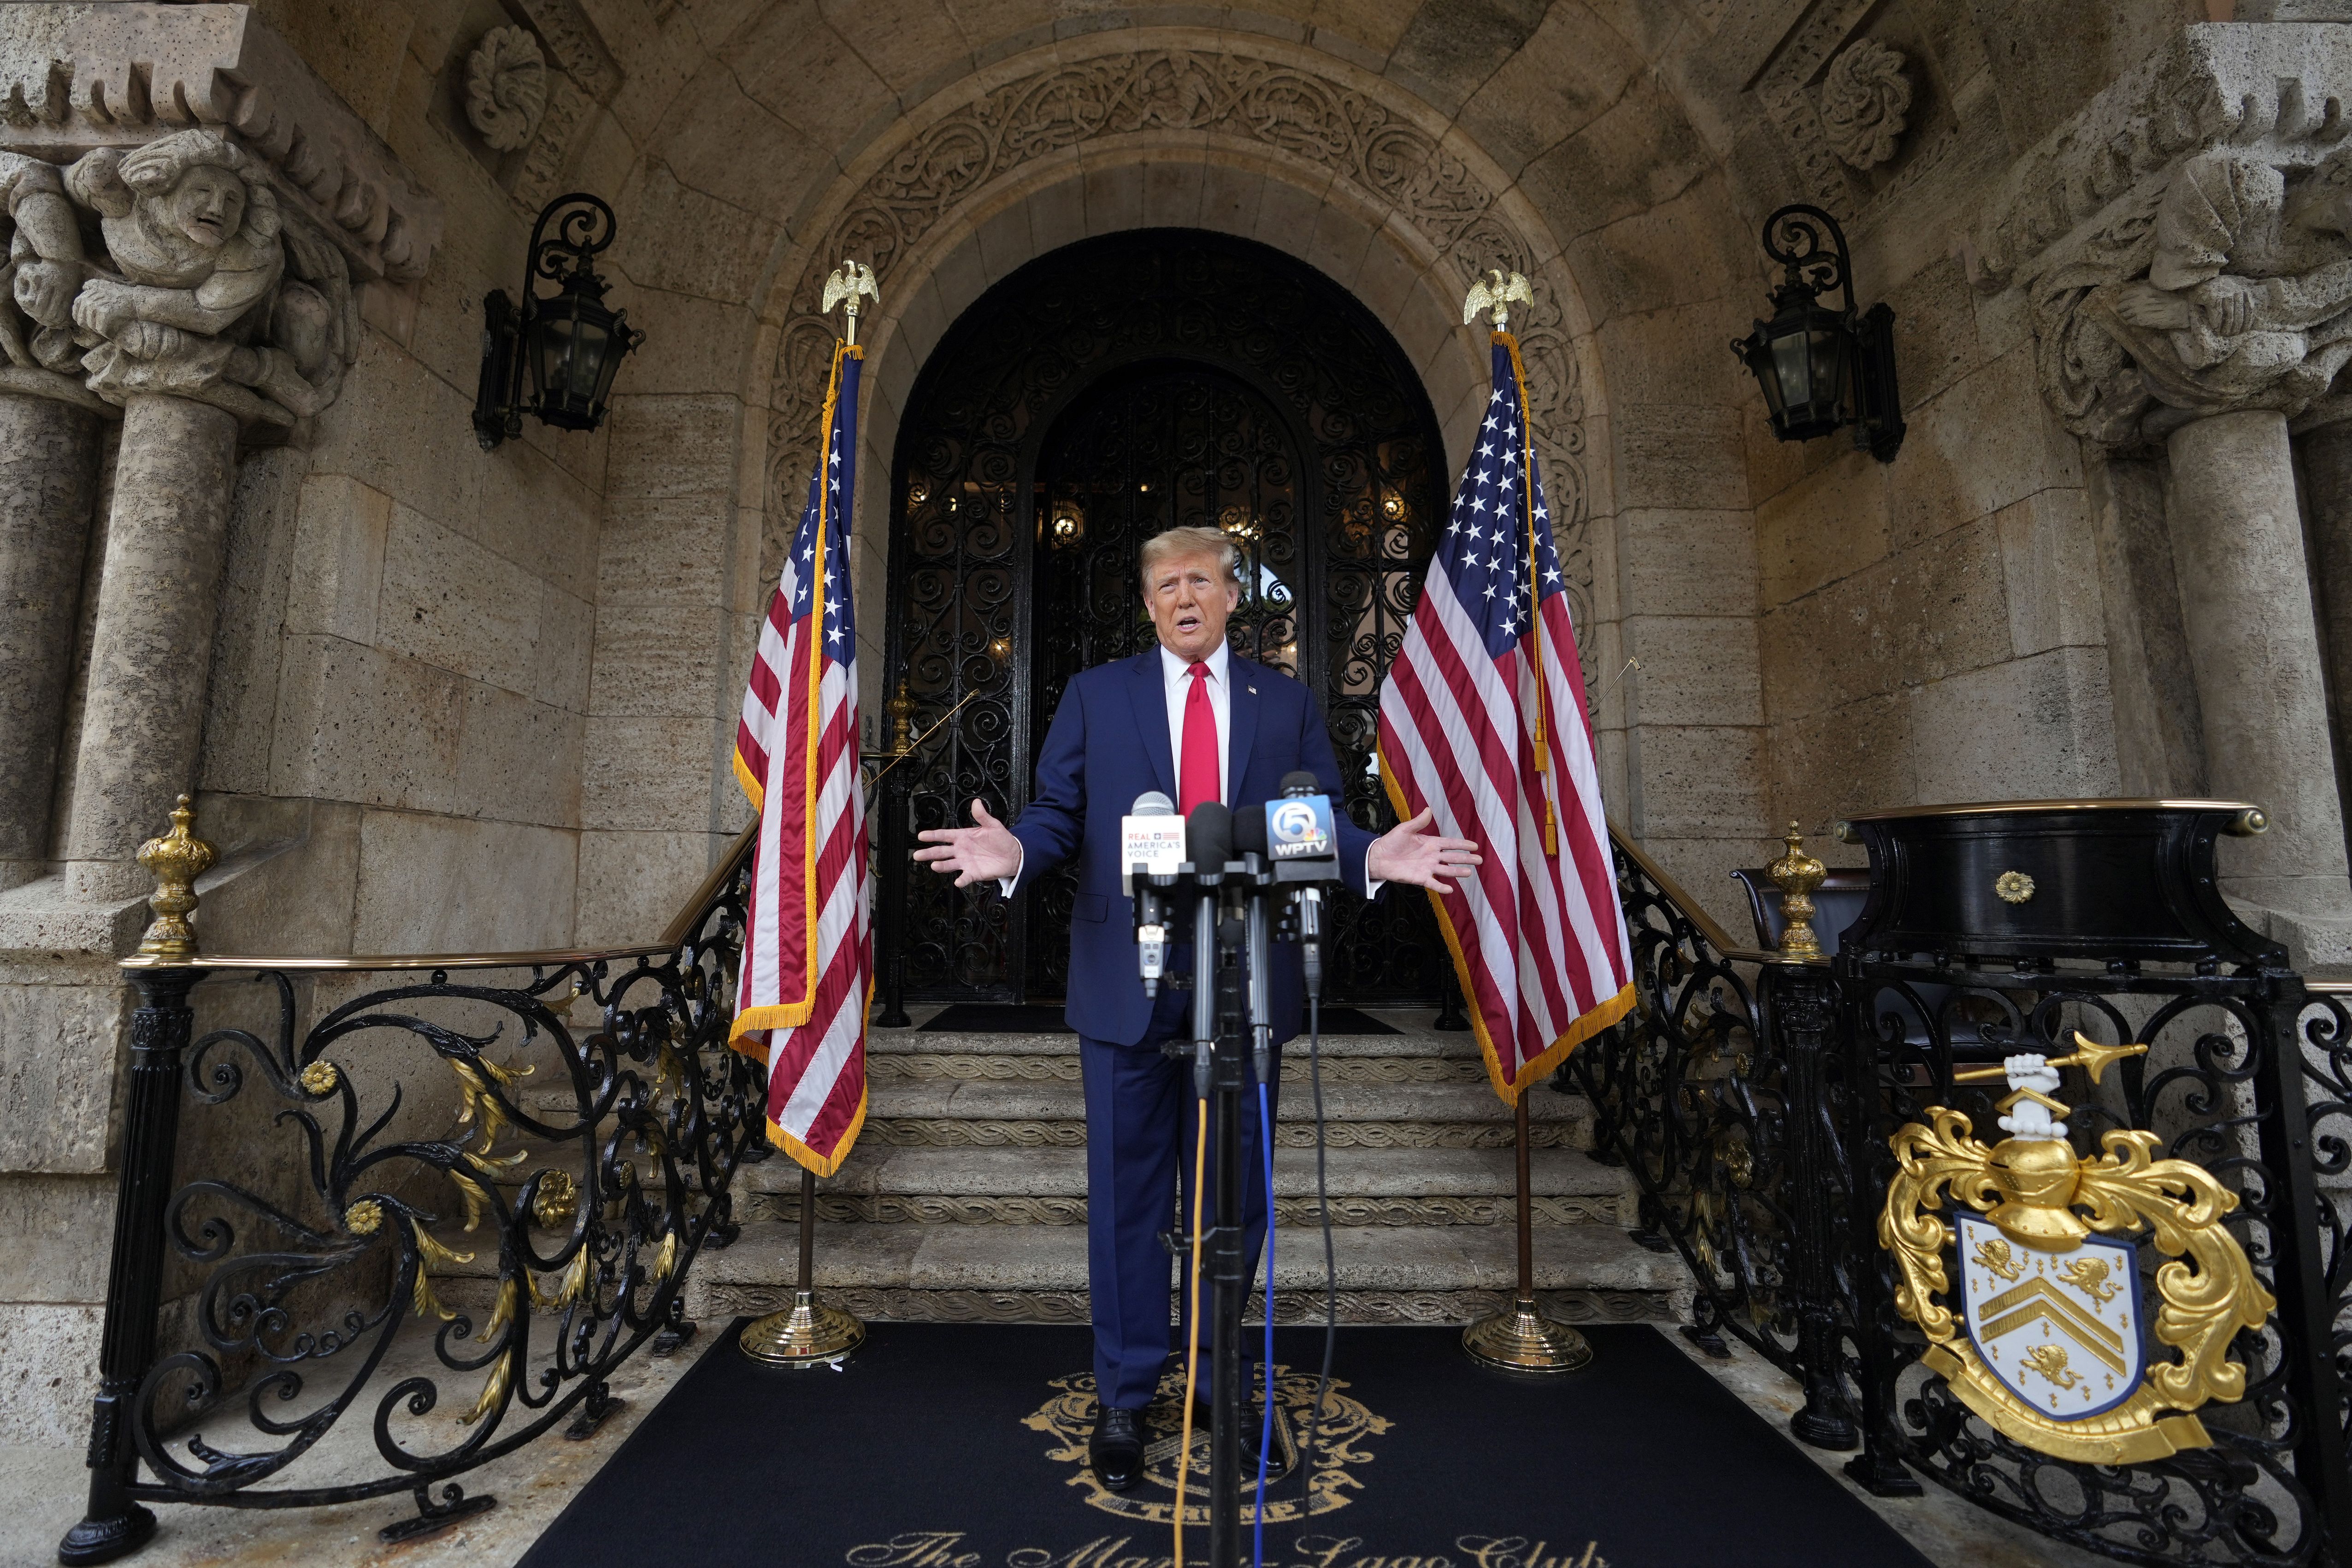 Trump gives a press conference at Mar-a-Lago